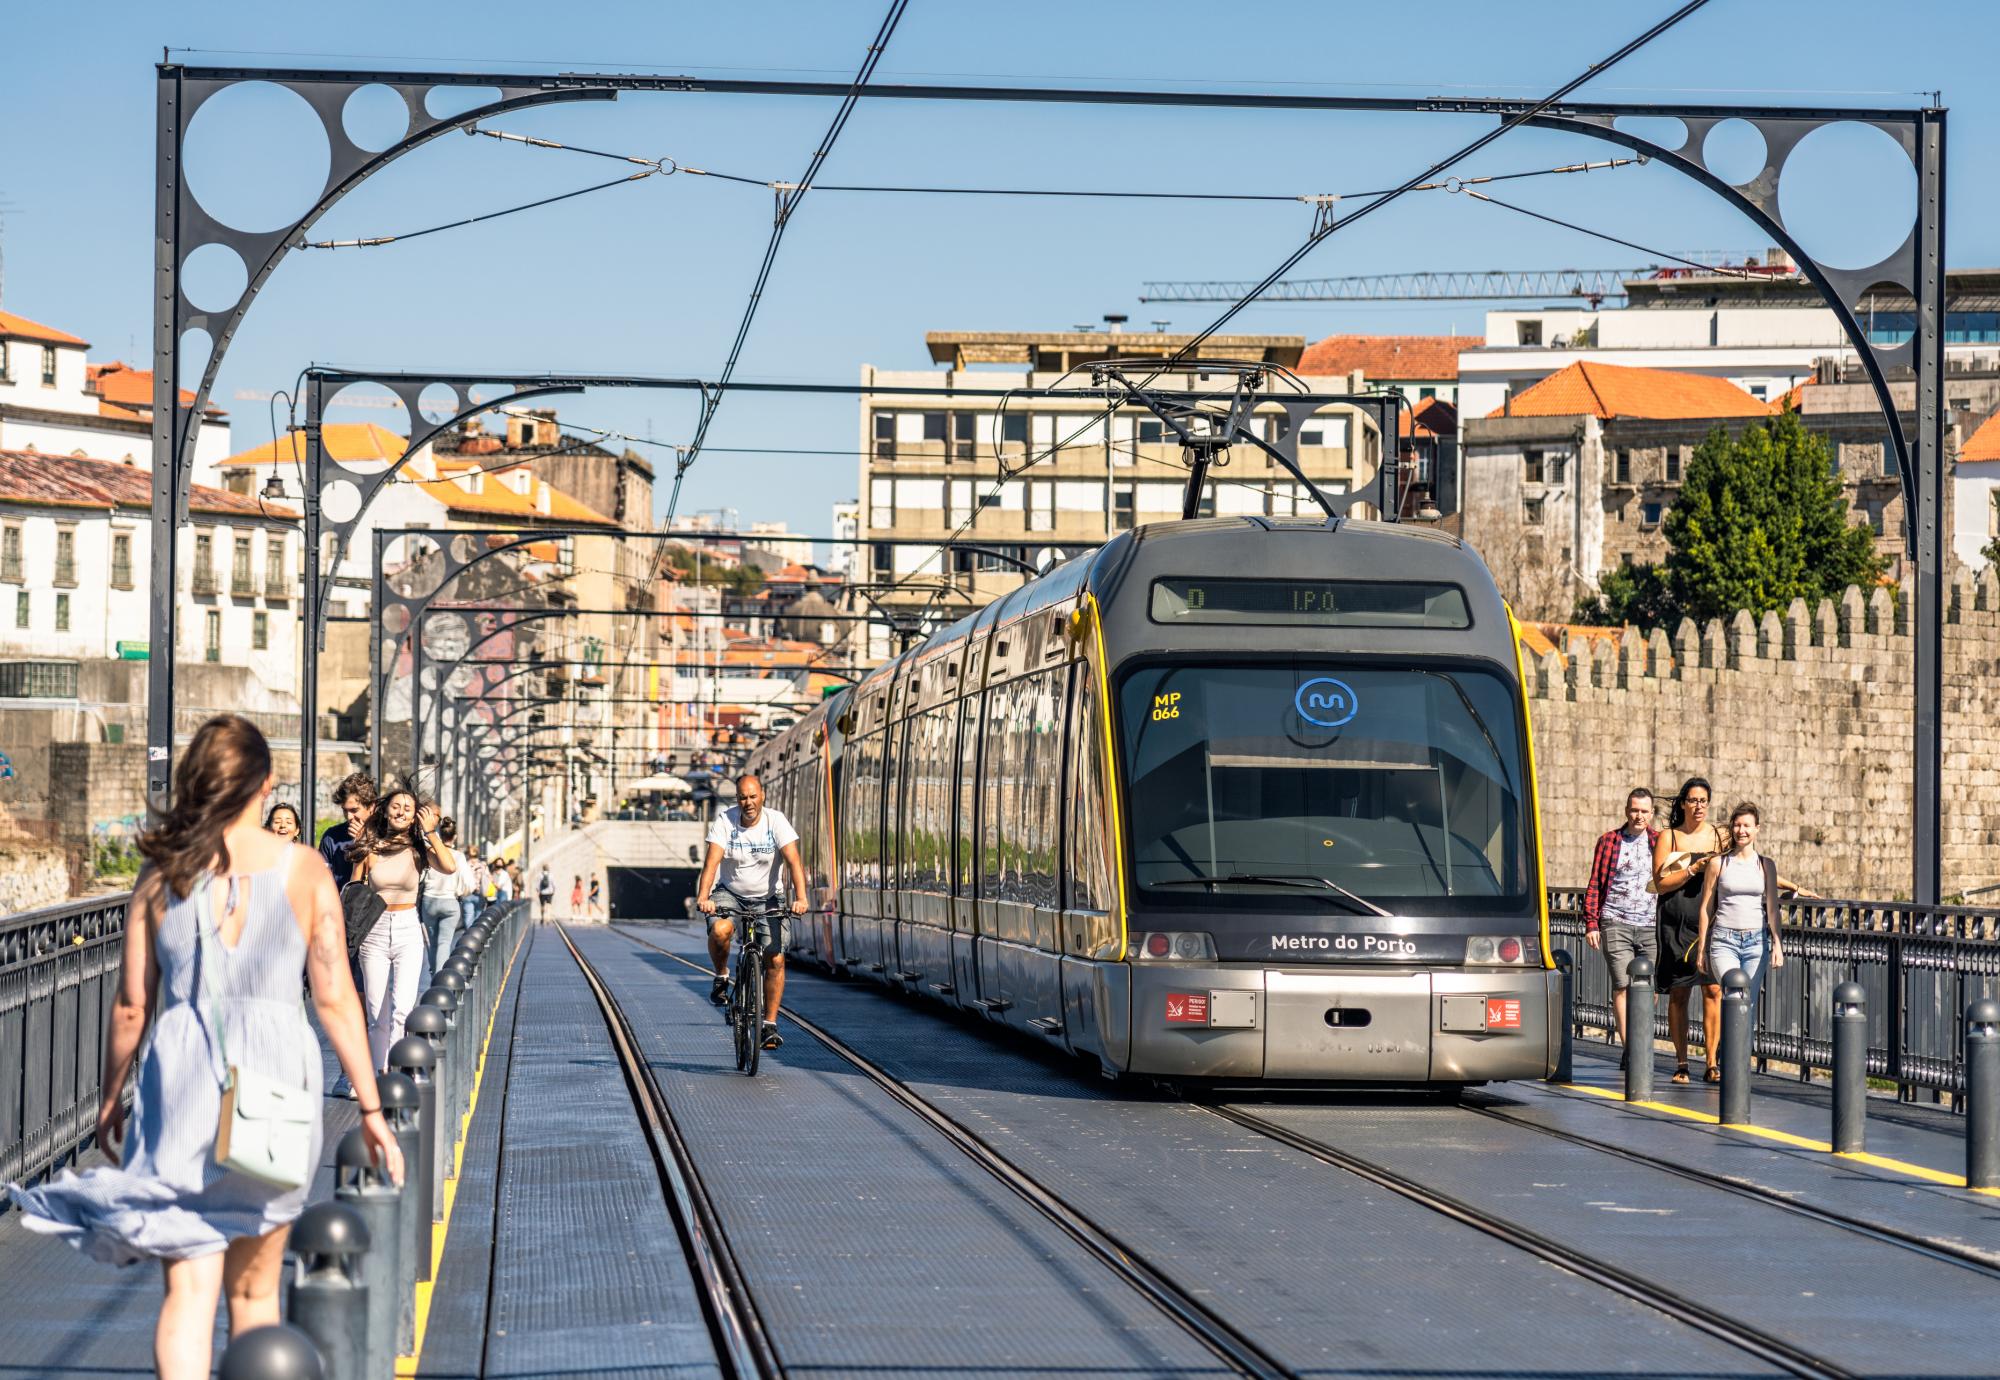 Metro tram in Porto, Portugal